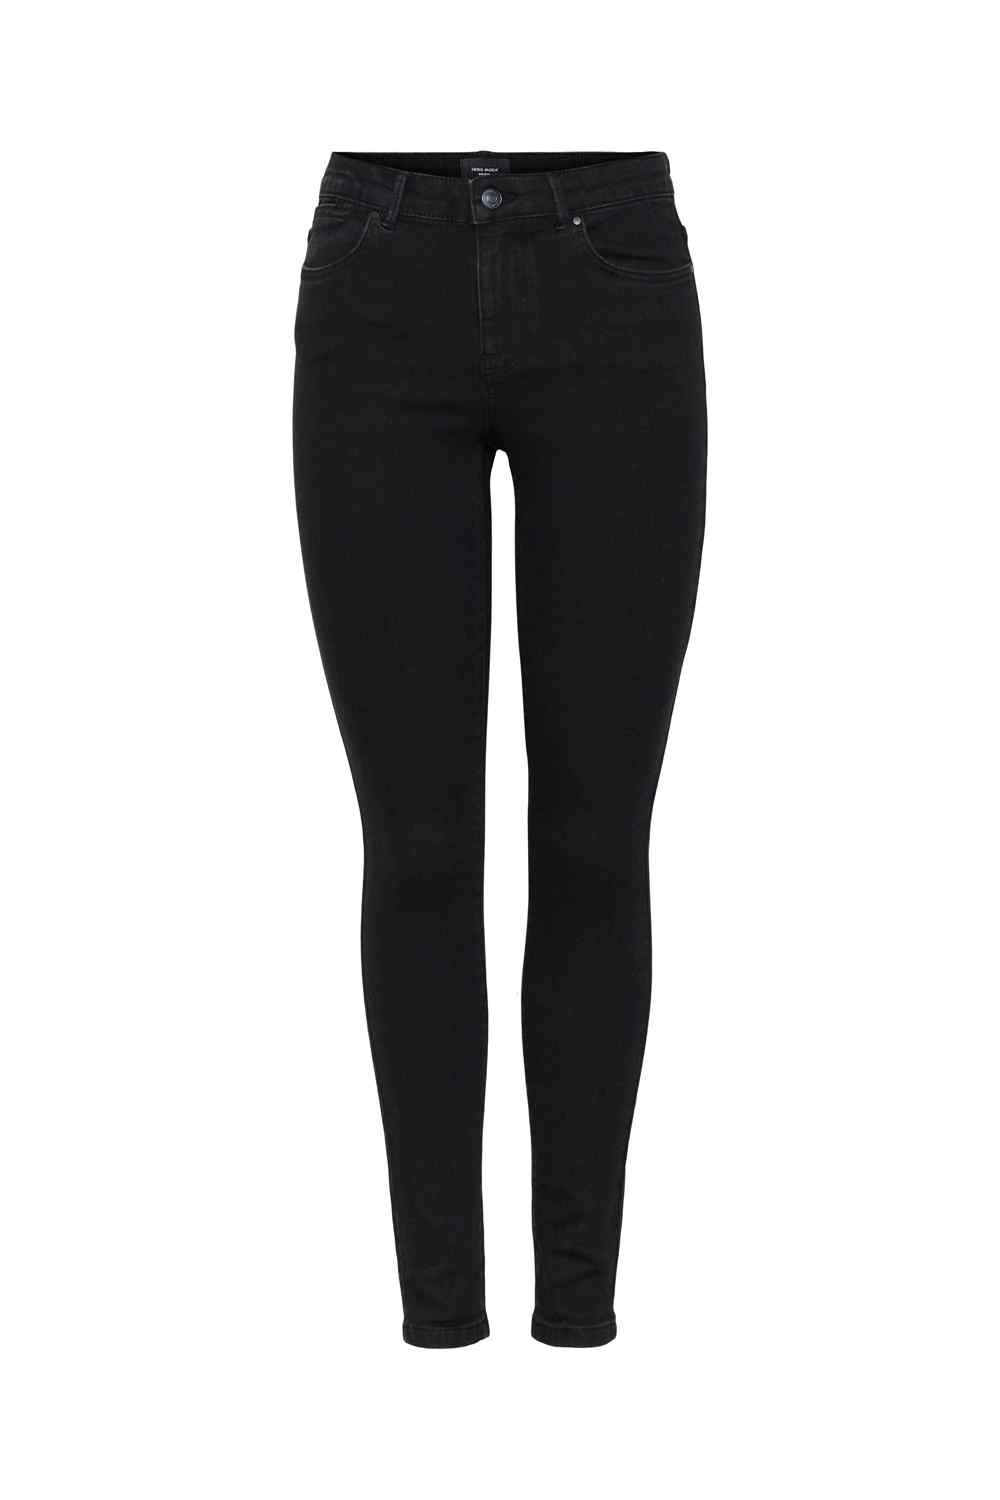 Vero Moda June Skinny Jean - Black 1 Shaws Department Stores